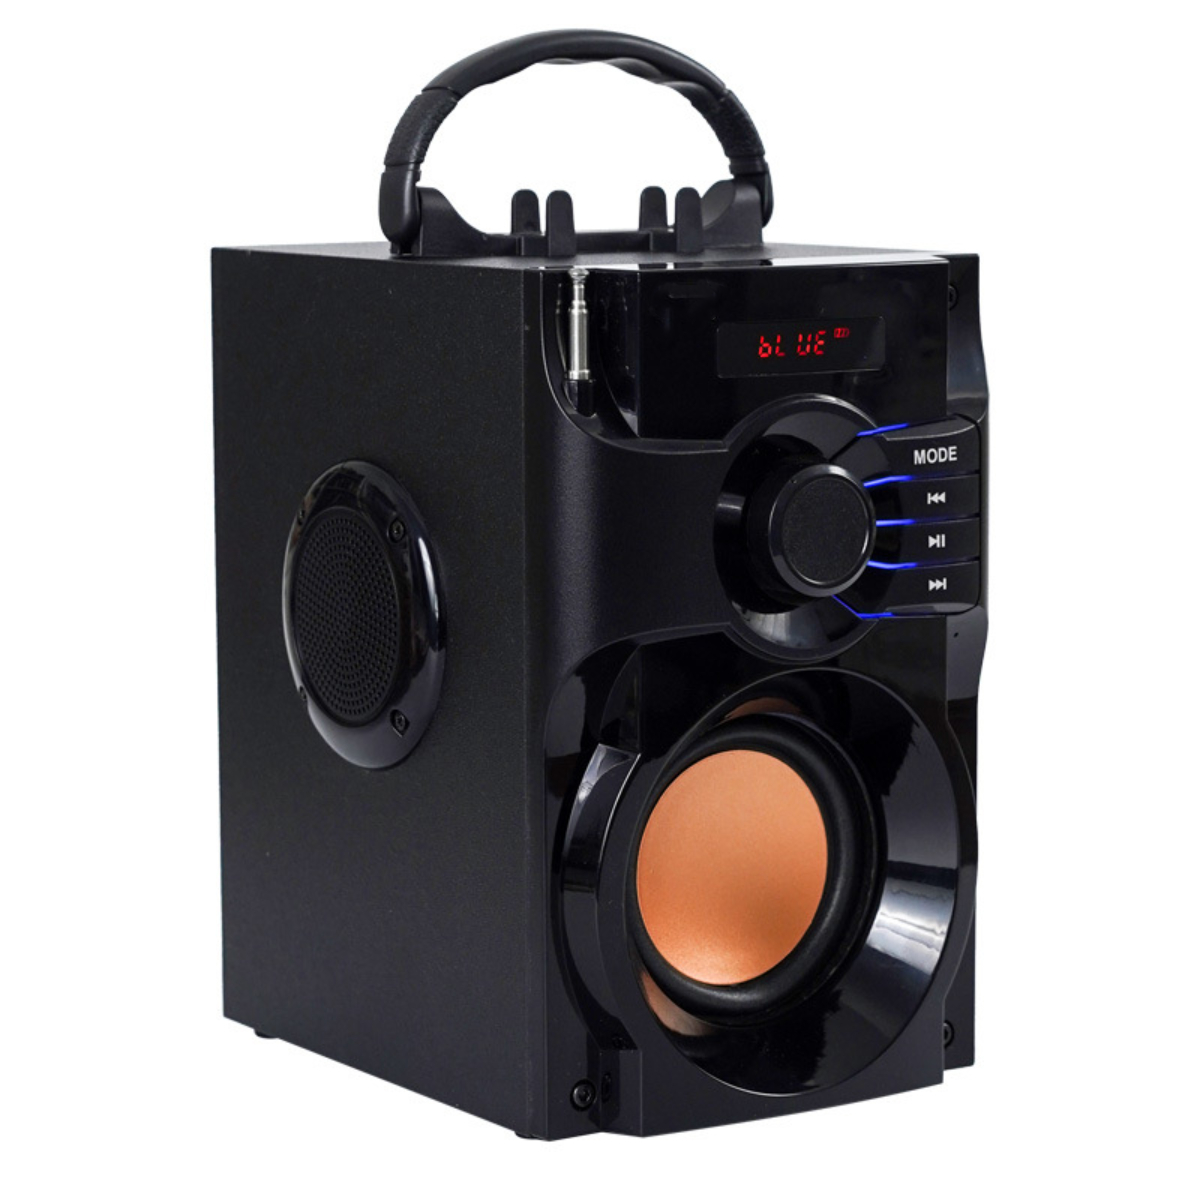 Outdoor-Lautsprecher, Orange Bluetooth-Lautsprecher Tragbarer Plug-in Lautsprecher Lautsprecher, ENBAOXIN Kabelloser Mini